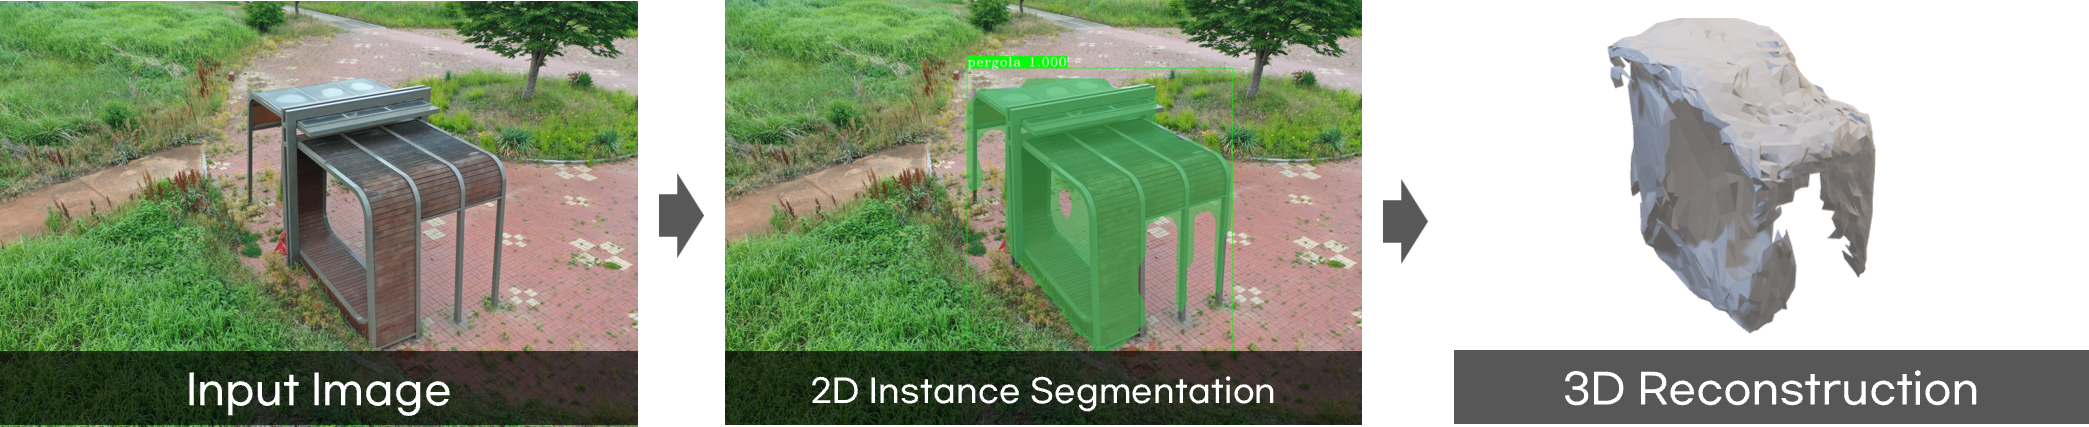 Mesh Prediction Branch 순서 1 Input Image 2 2D Instance Segmentation 3 3D Reconstruction 